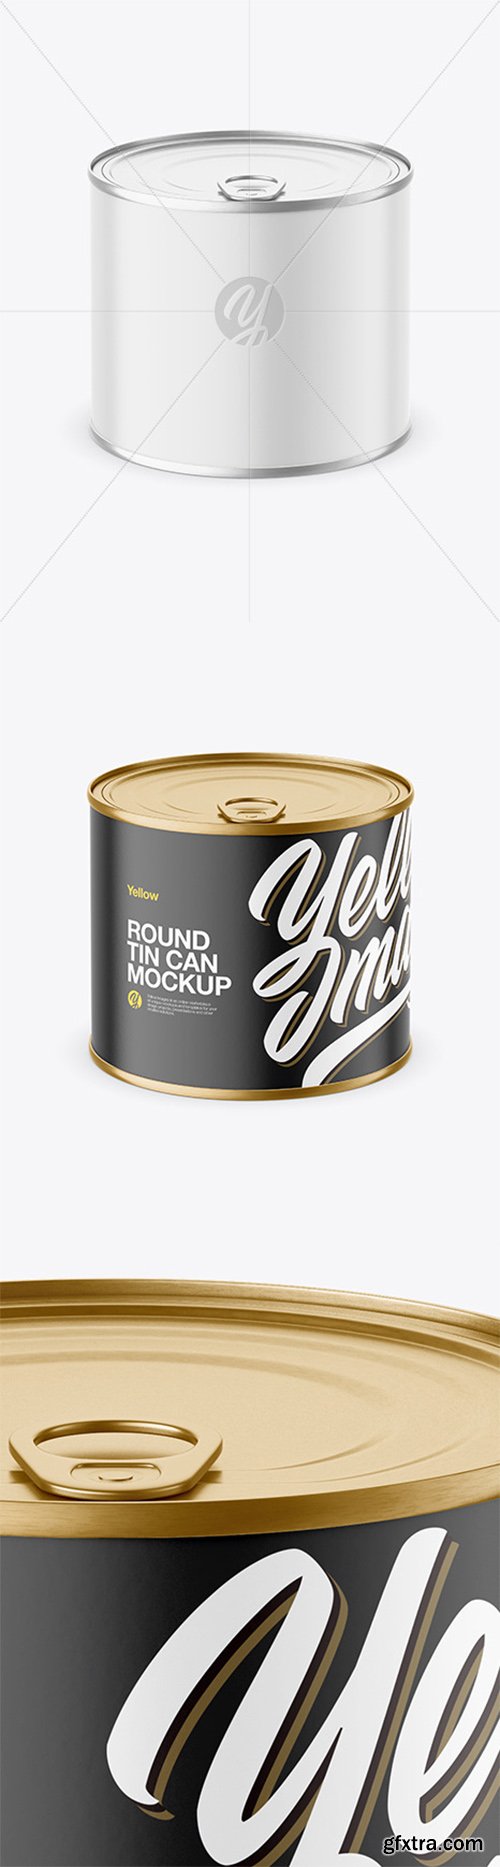 Round Tin Can Mockup 65617